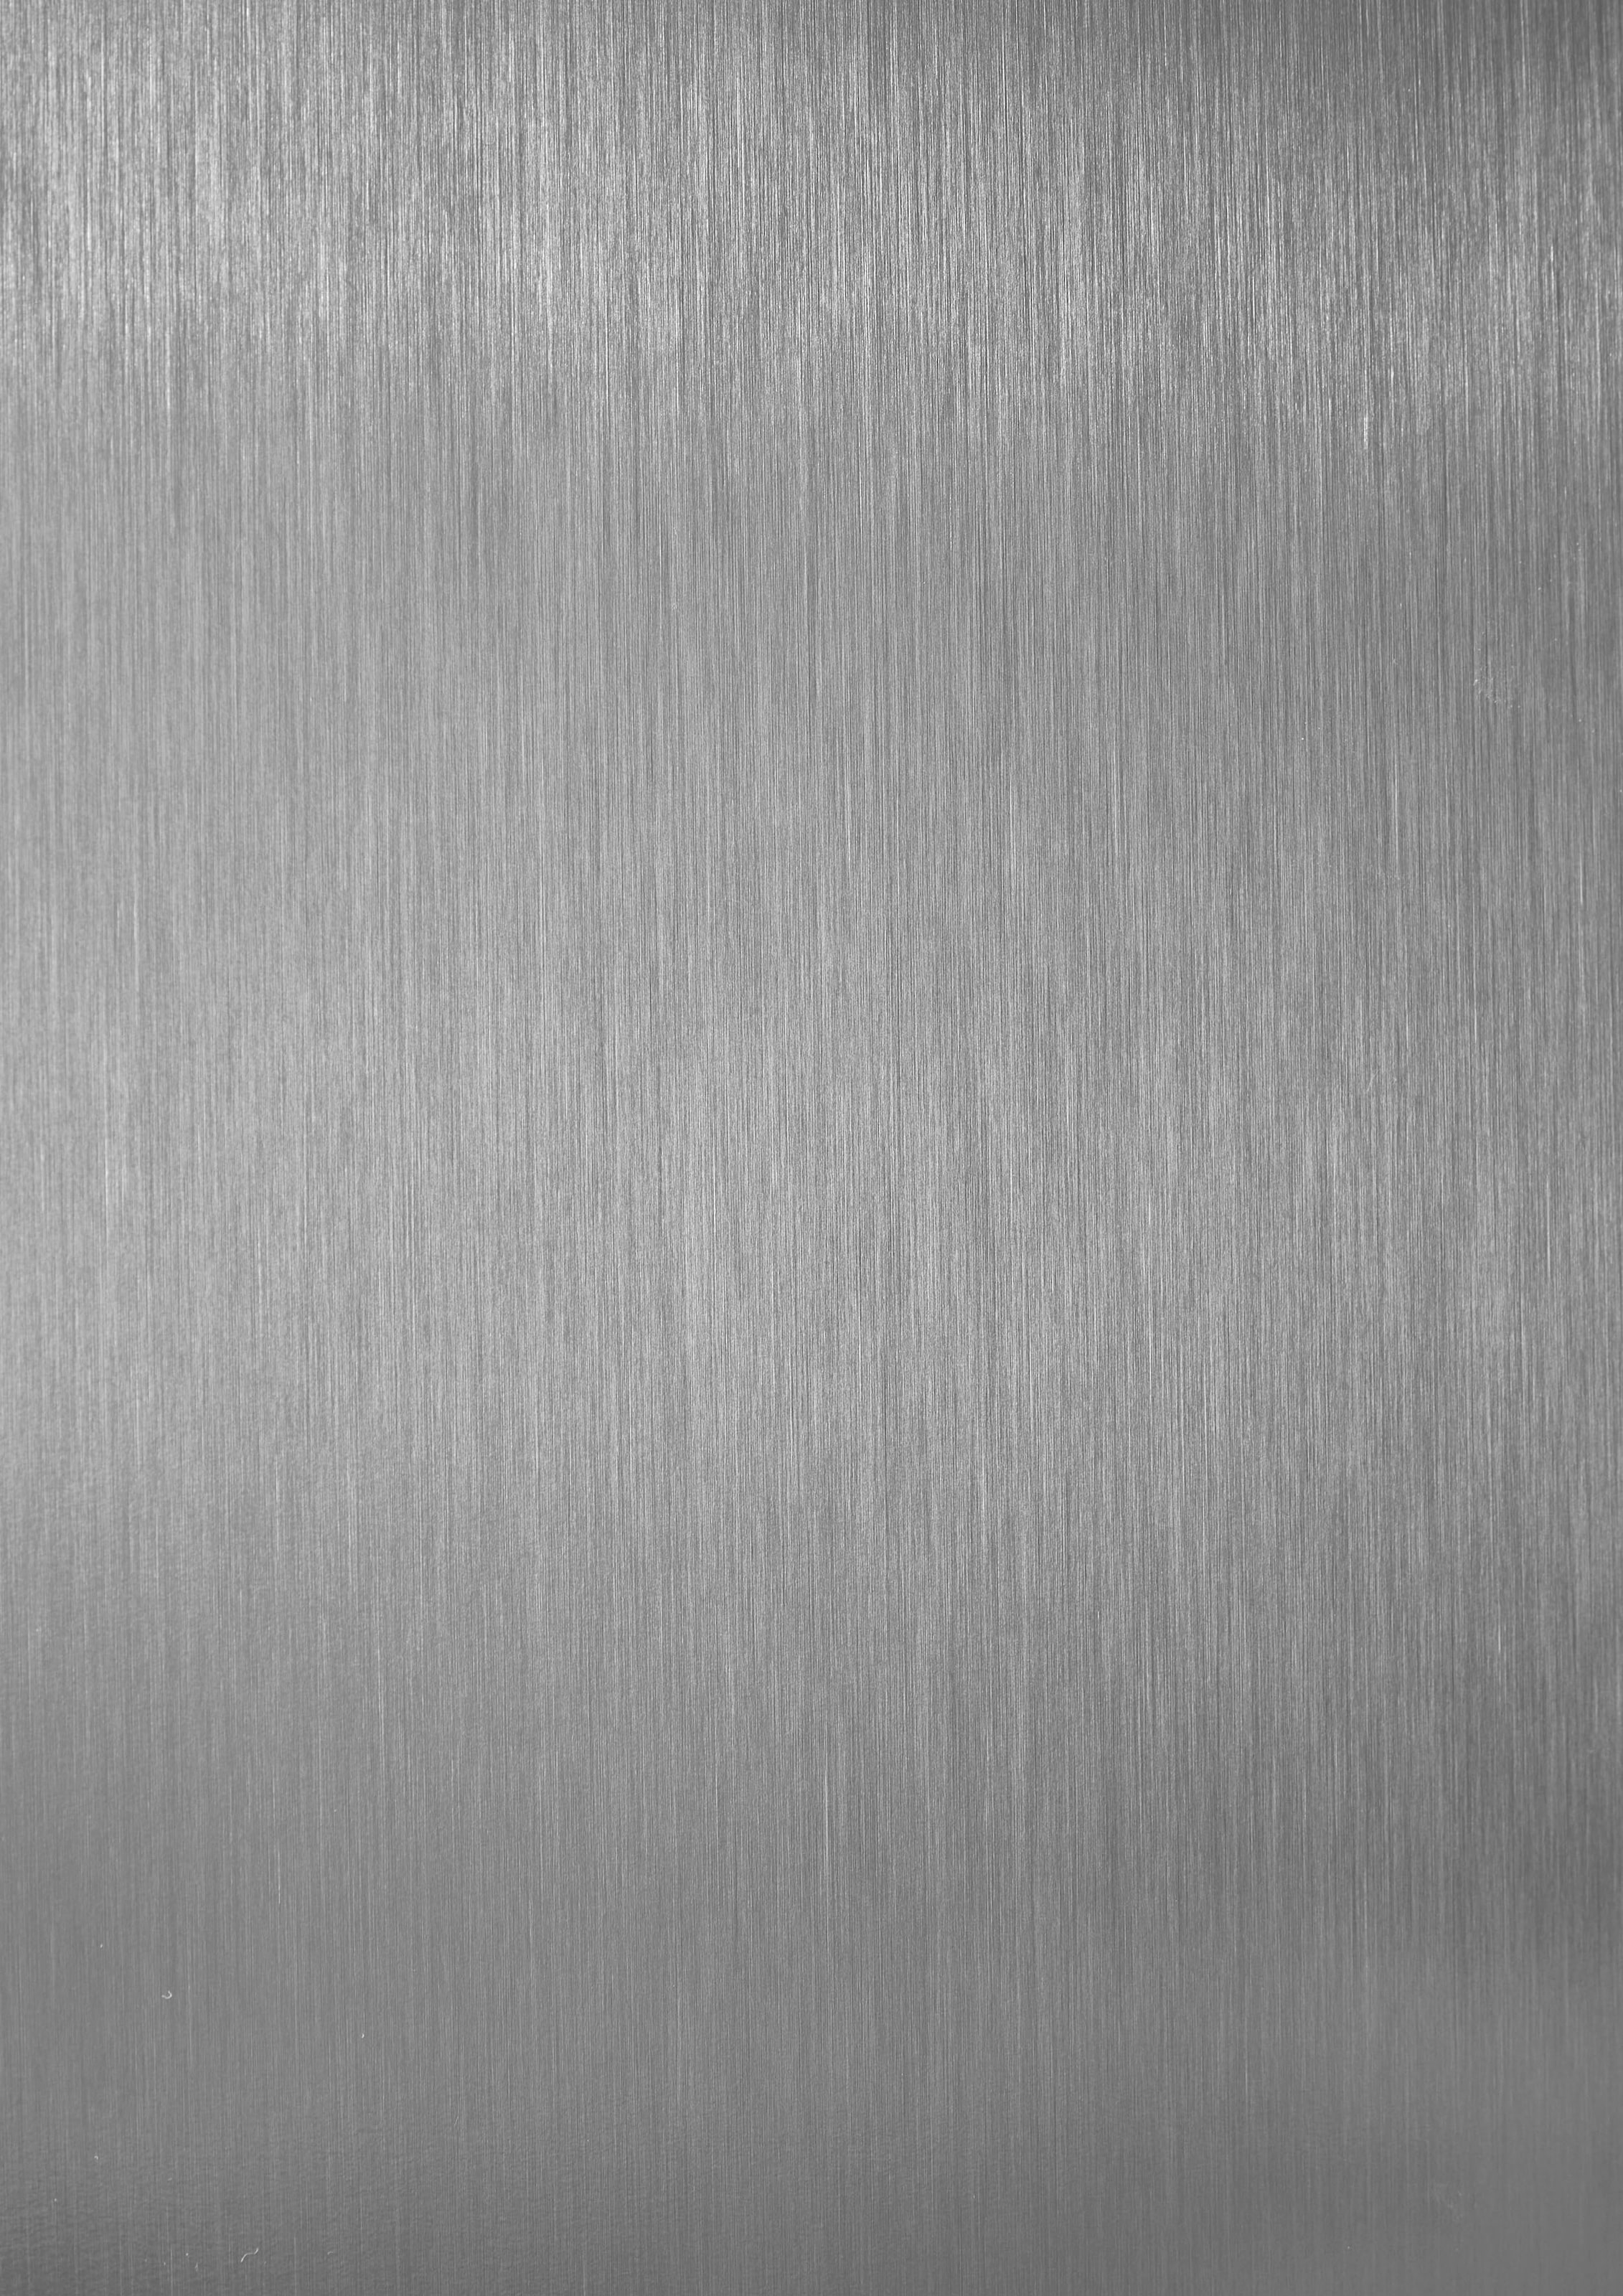 Hisense Side-by-Side »RS677N4A«, RS677N4AFC, 178,6 cm hoch, 91 cm breit  jetzt im OTTO Online Shop